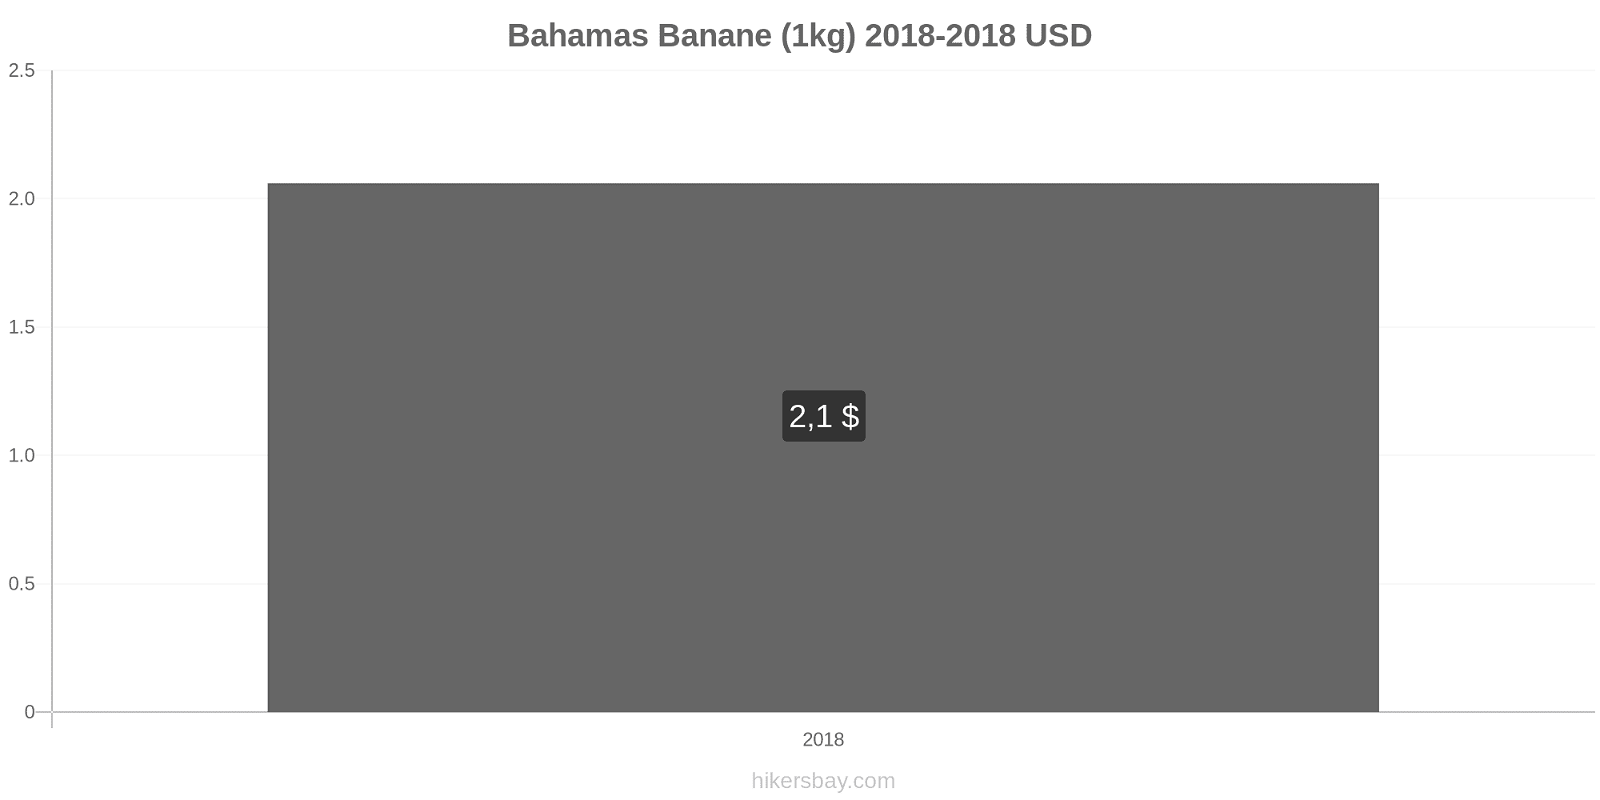 Bahamas Preisänderungen Bananen (1kg) hikersbay.com